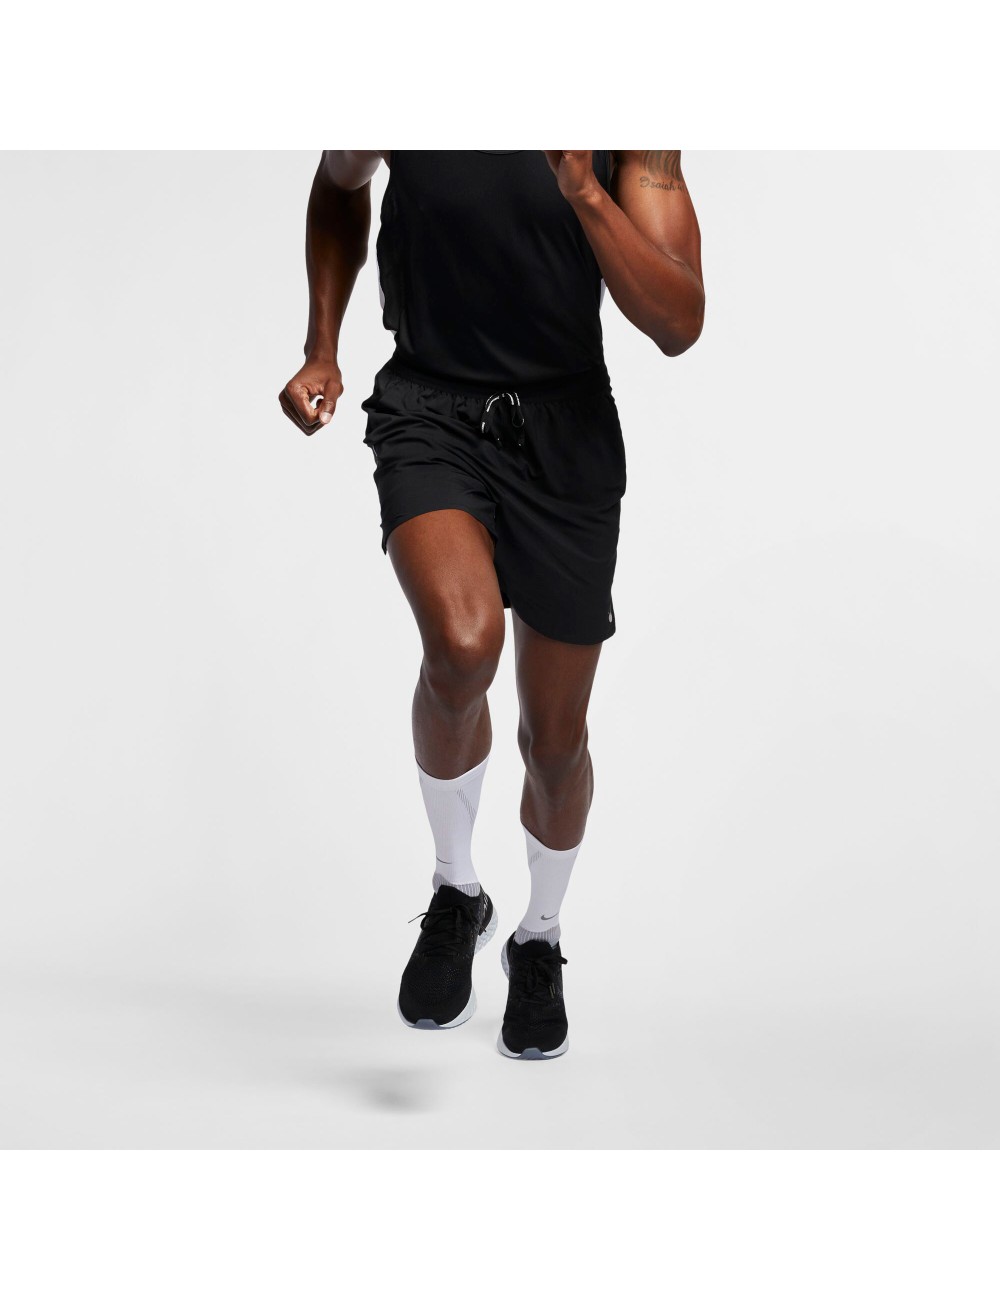 Nike scurt care ruleaza pantaloni negri